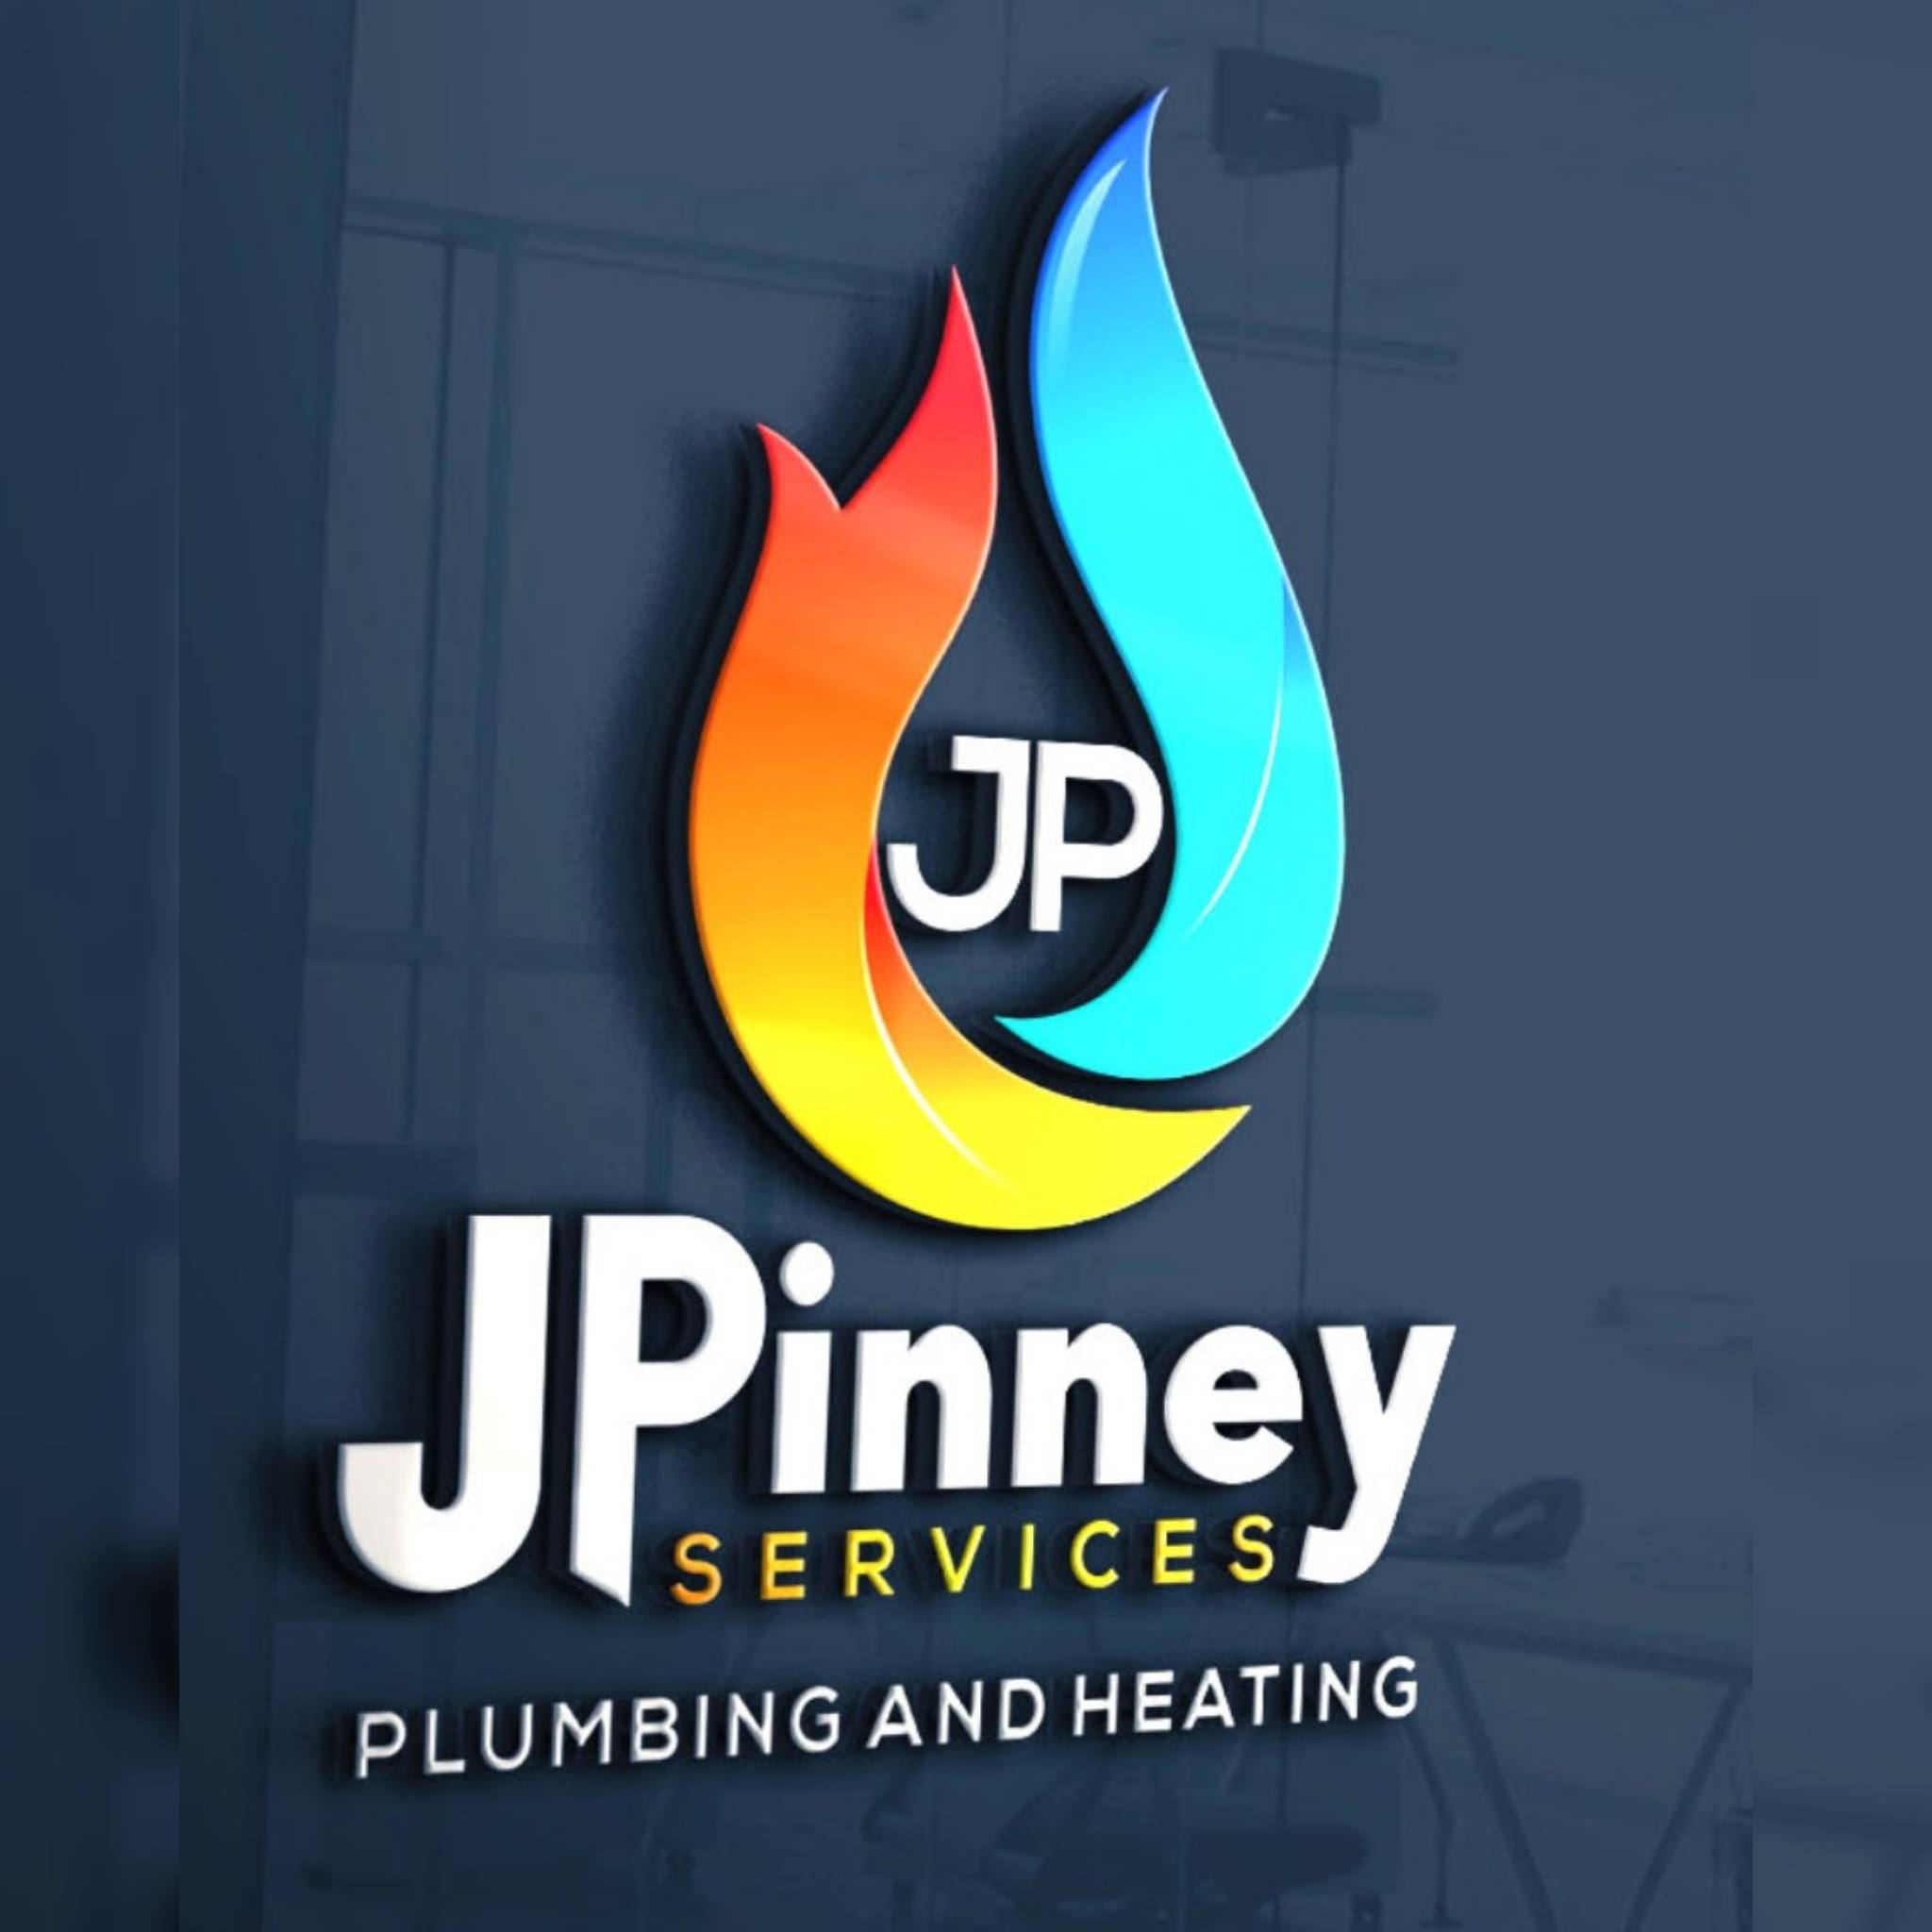 JPinney Services